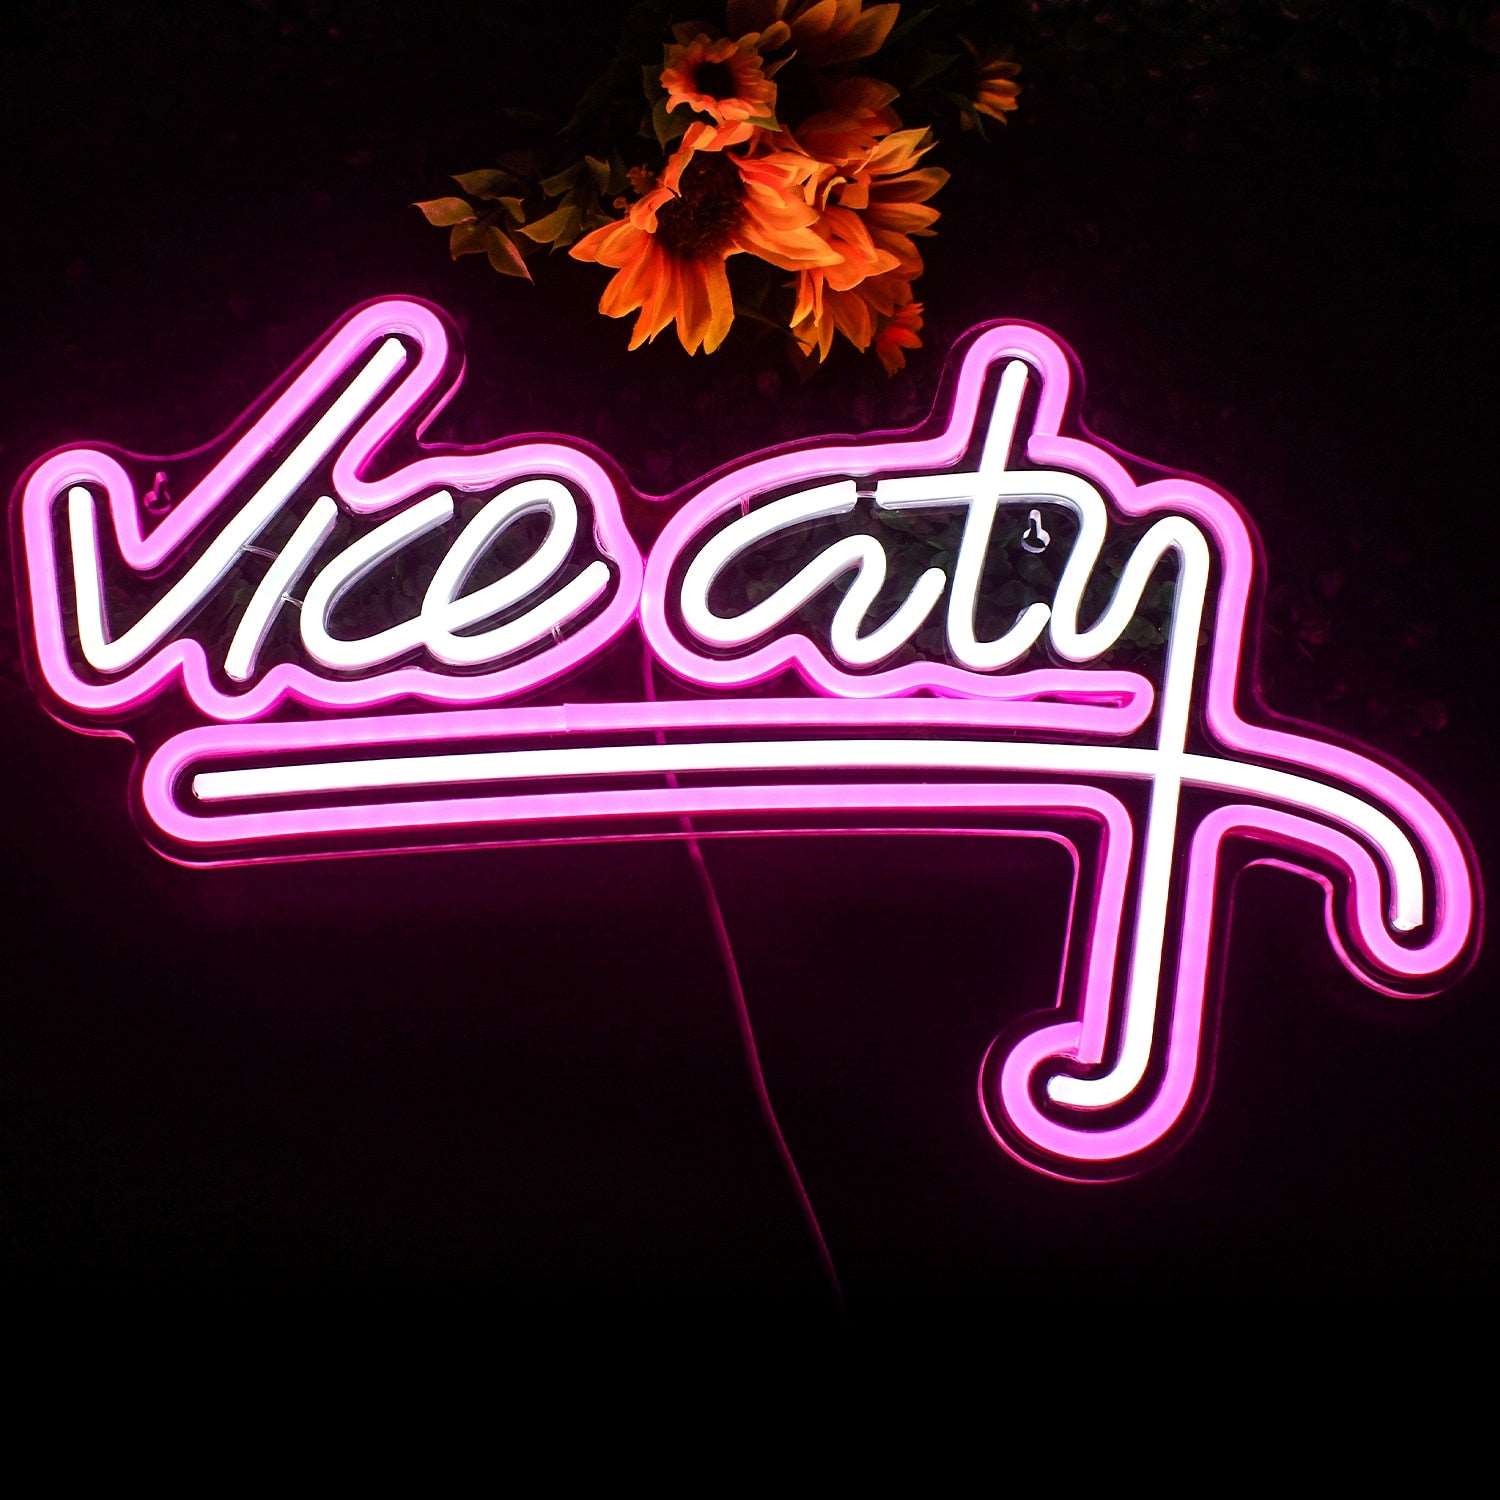 Vice City Sign